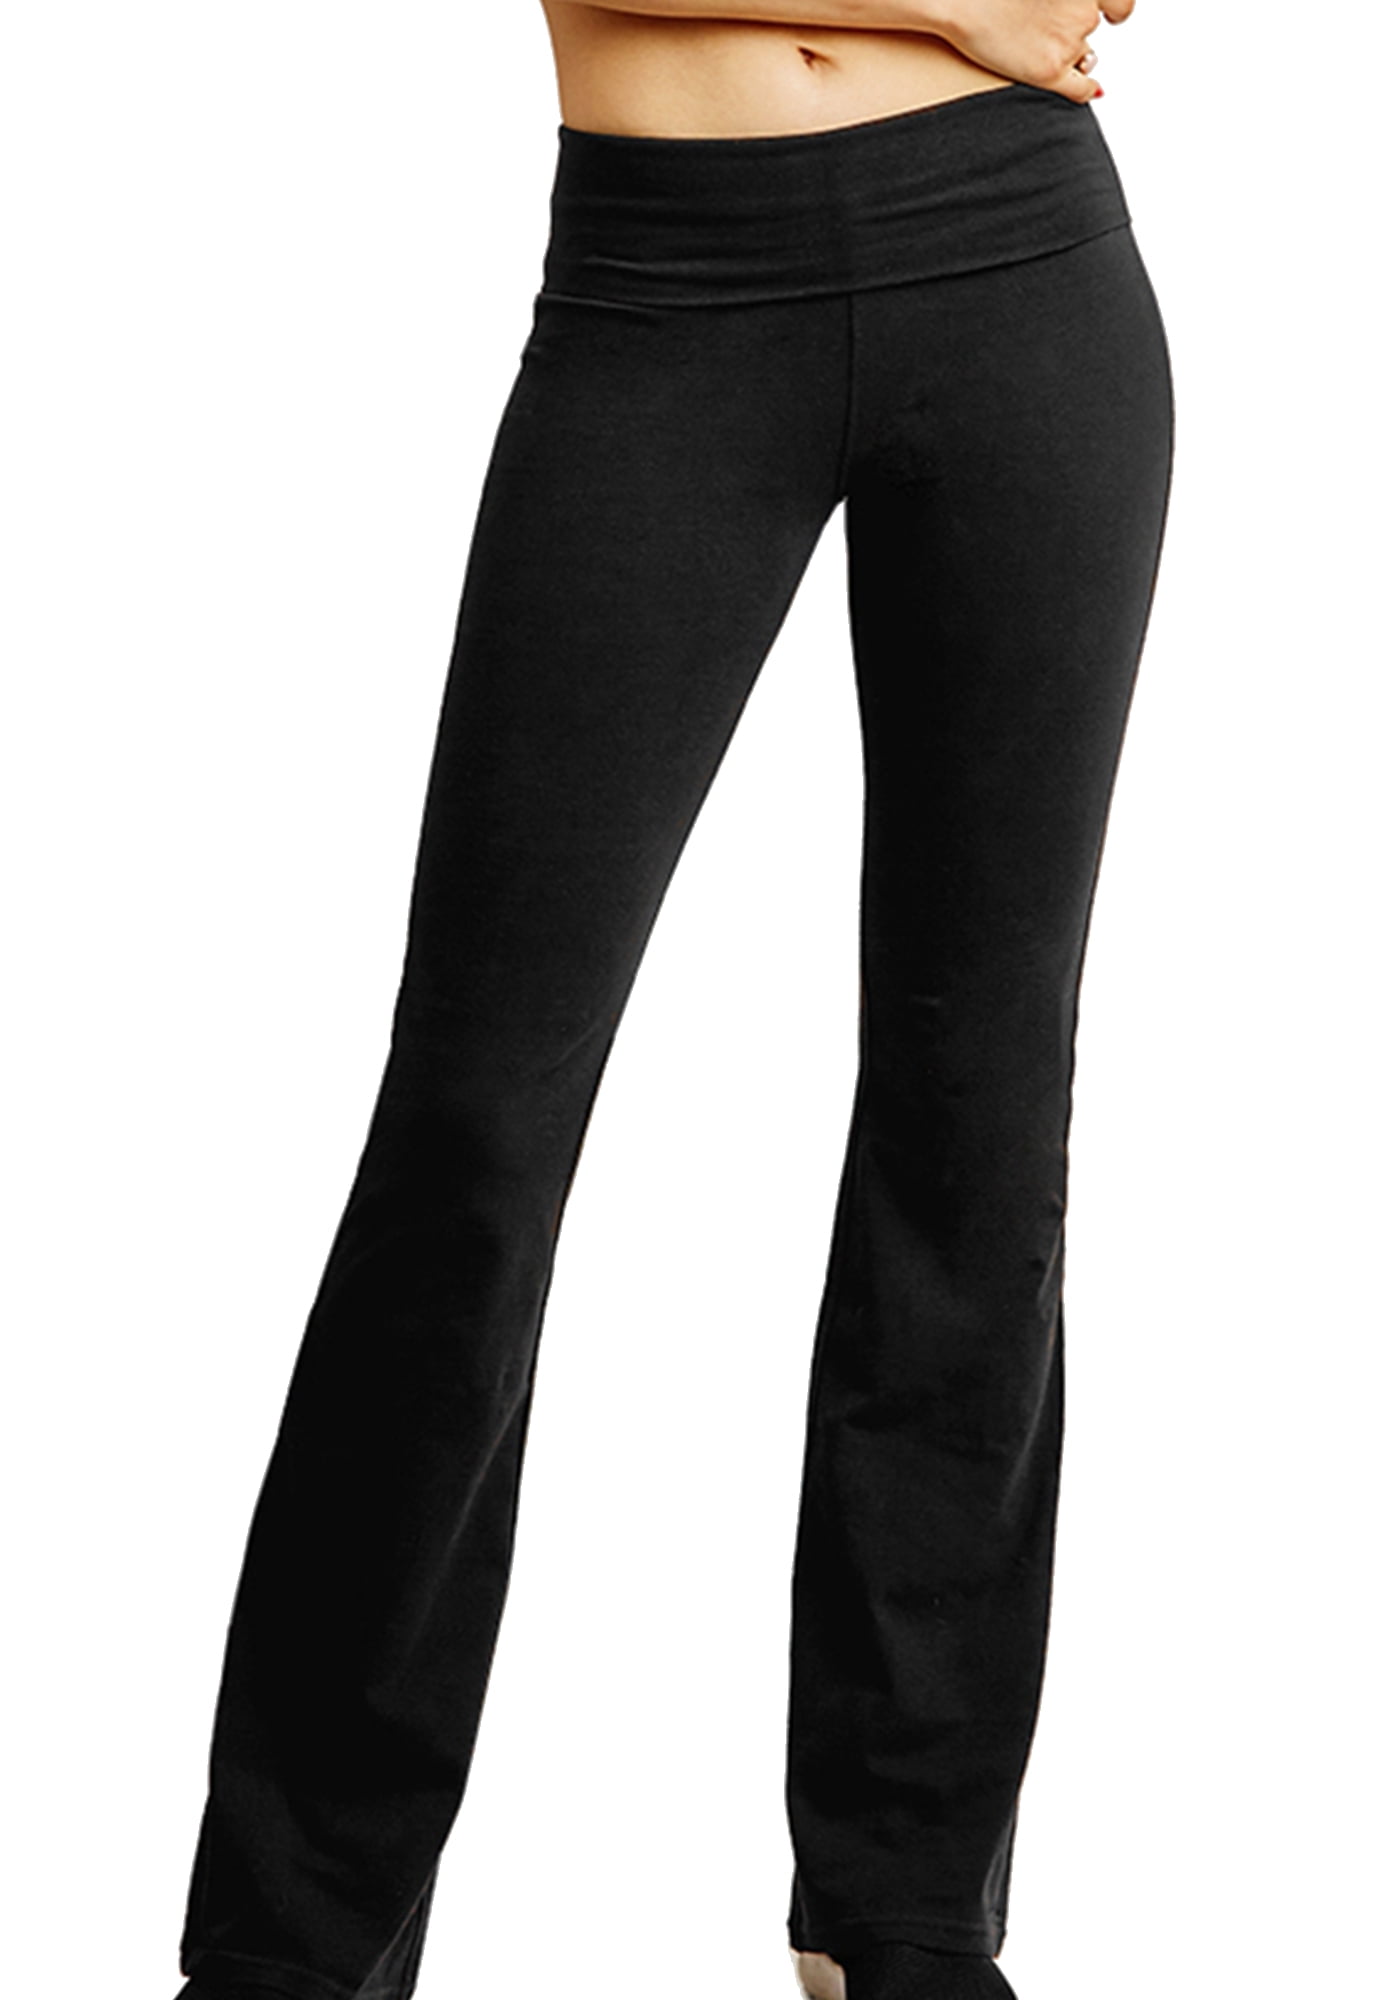 ClothingAve. - Foldover Contrast Waist Flare Yoga Pants (Variety Pack